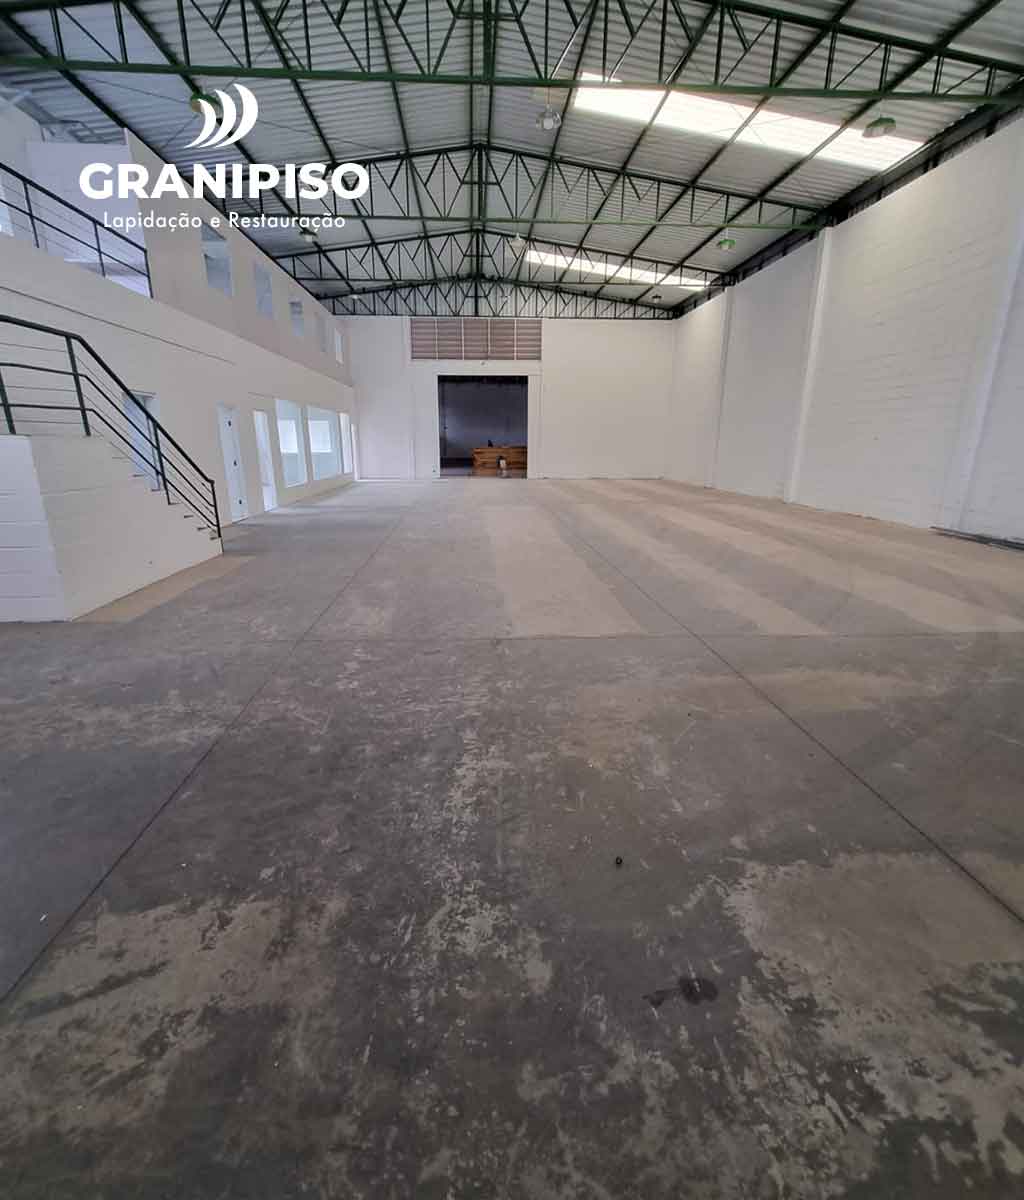 lapidacao-piso-industrial-galpao-granipiso-03